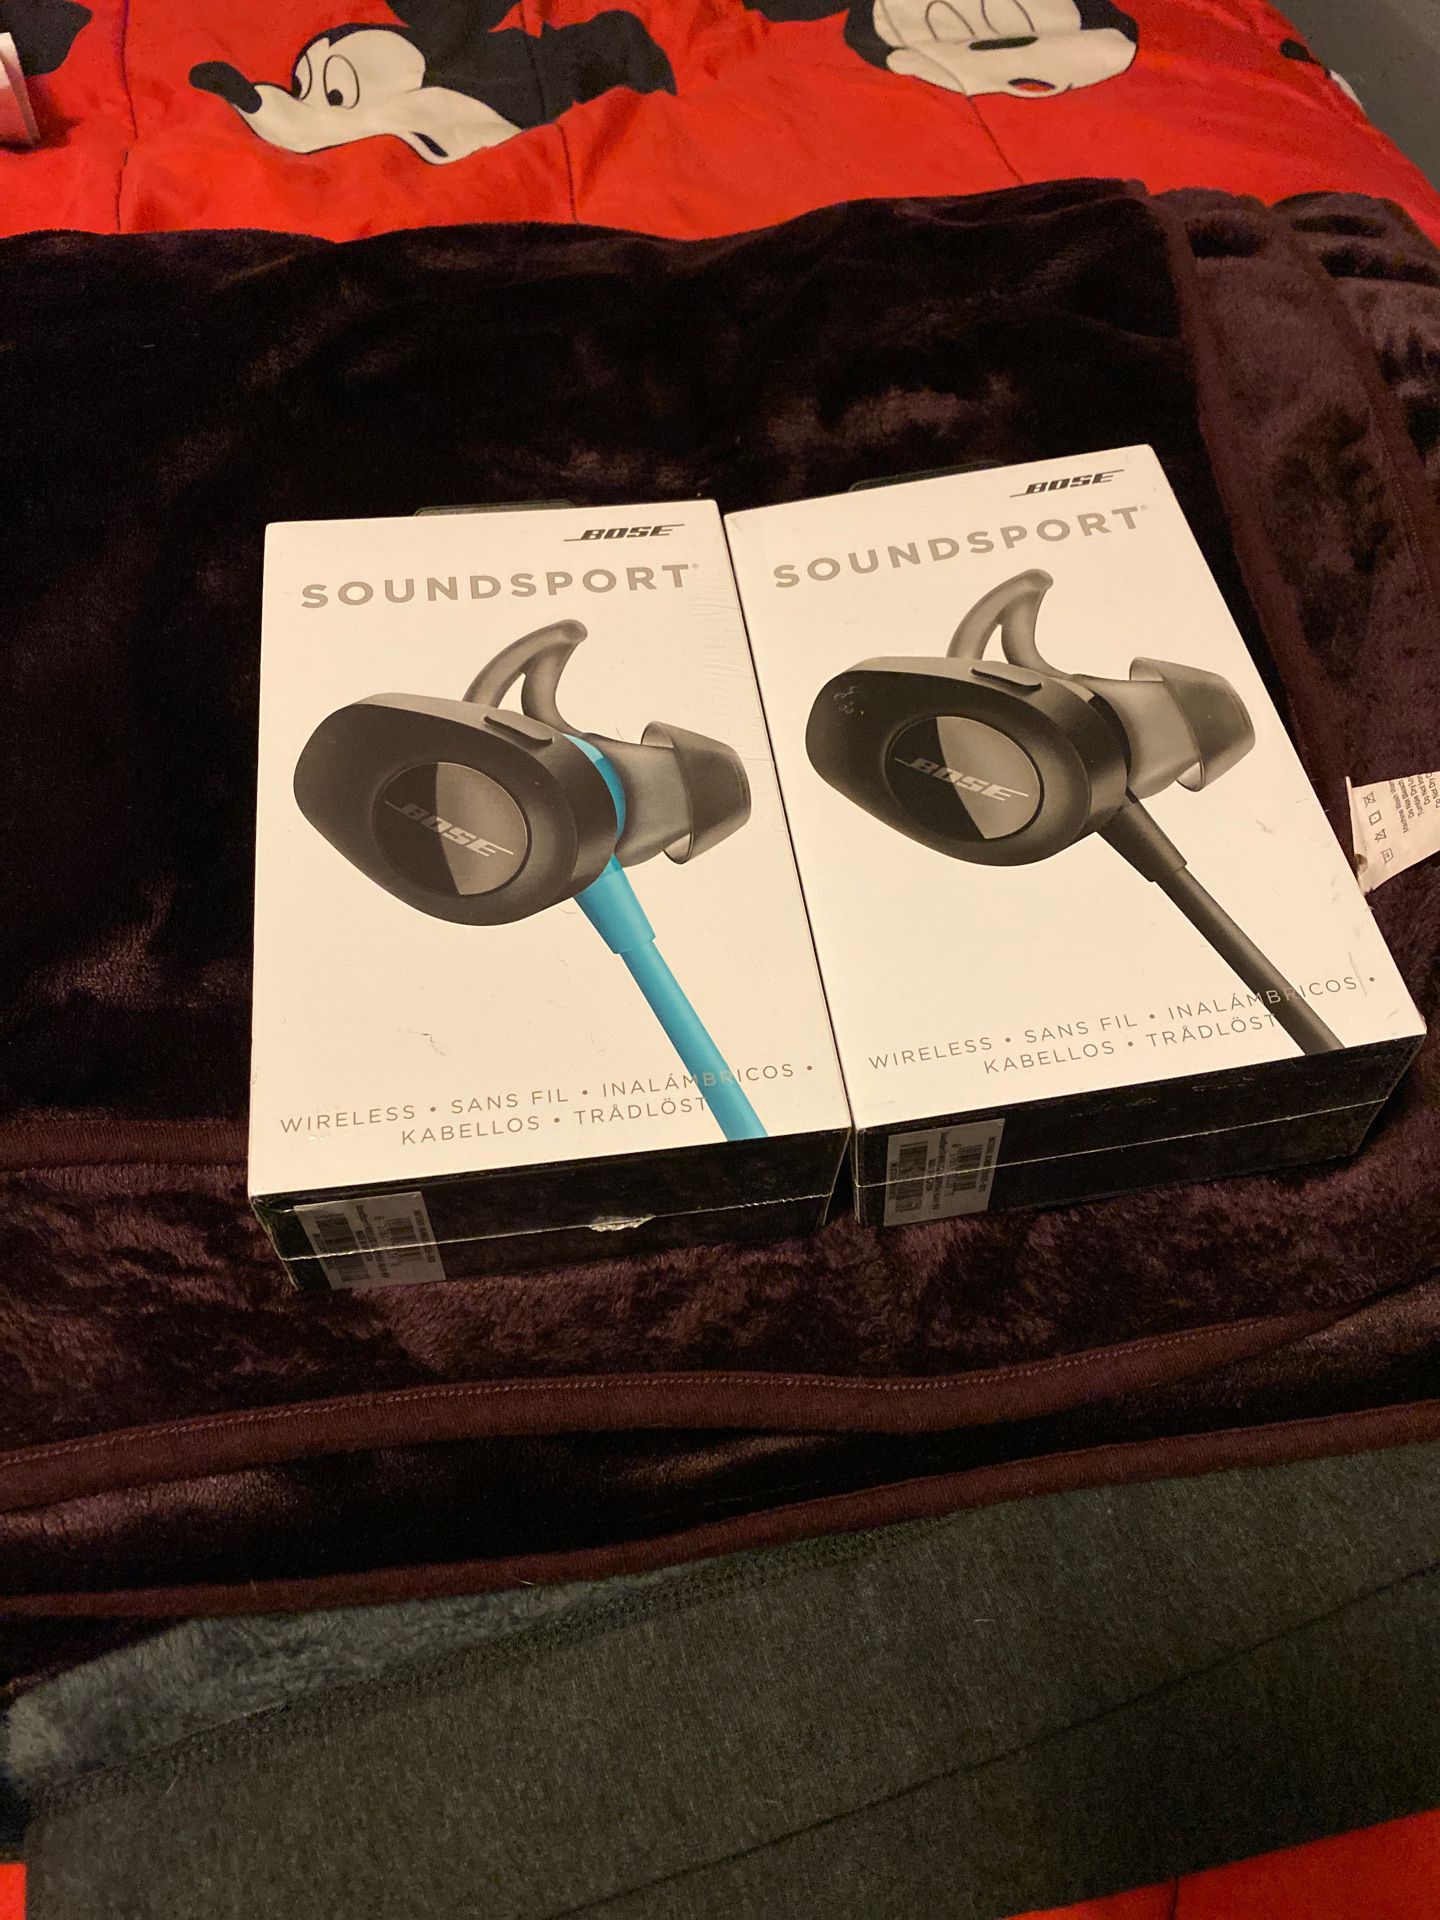 Bose soundsport headphones